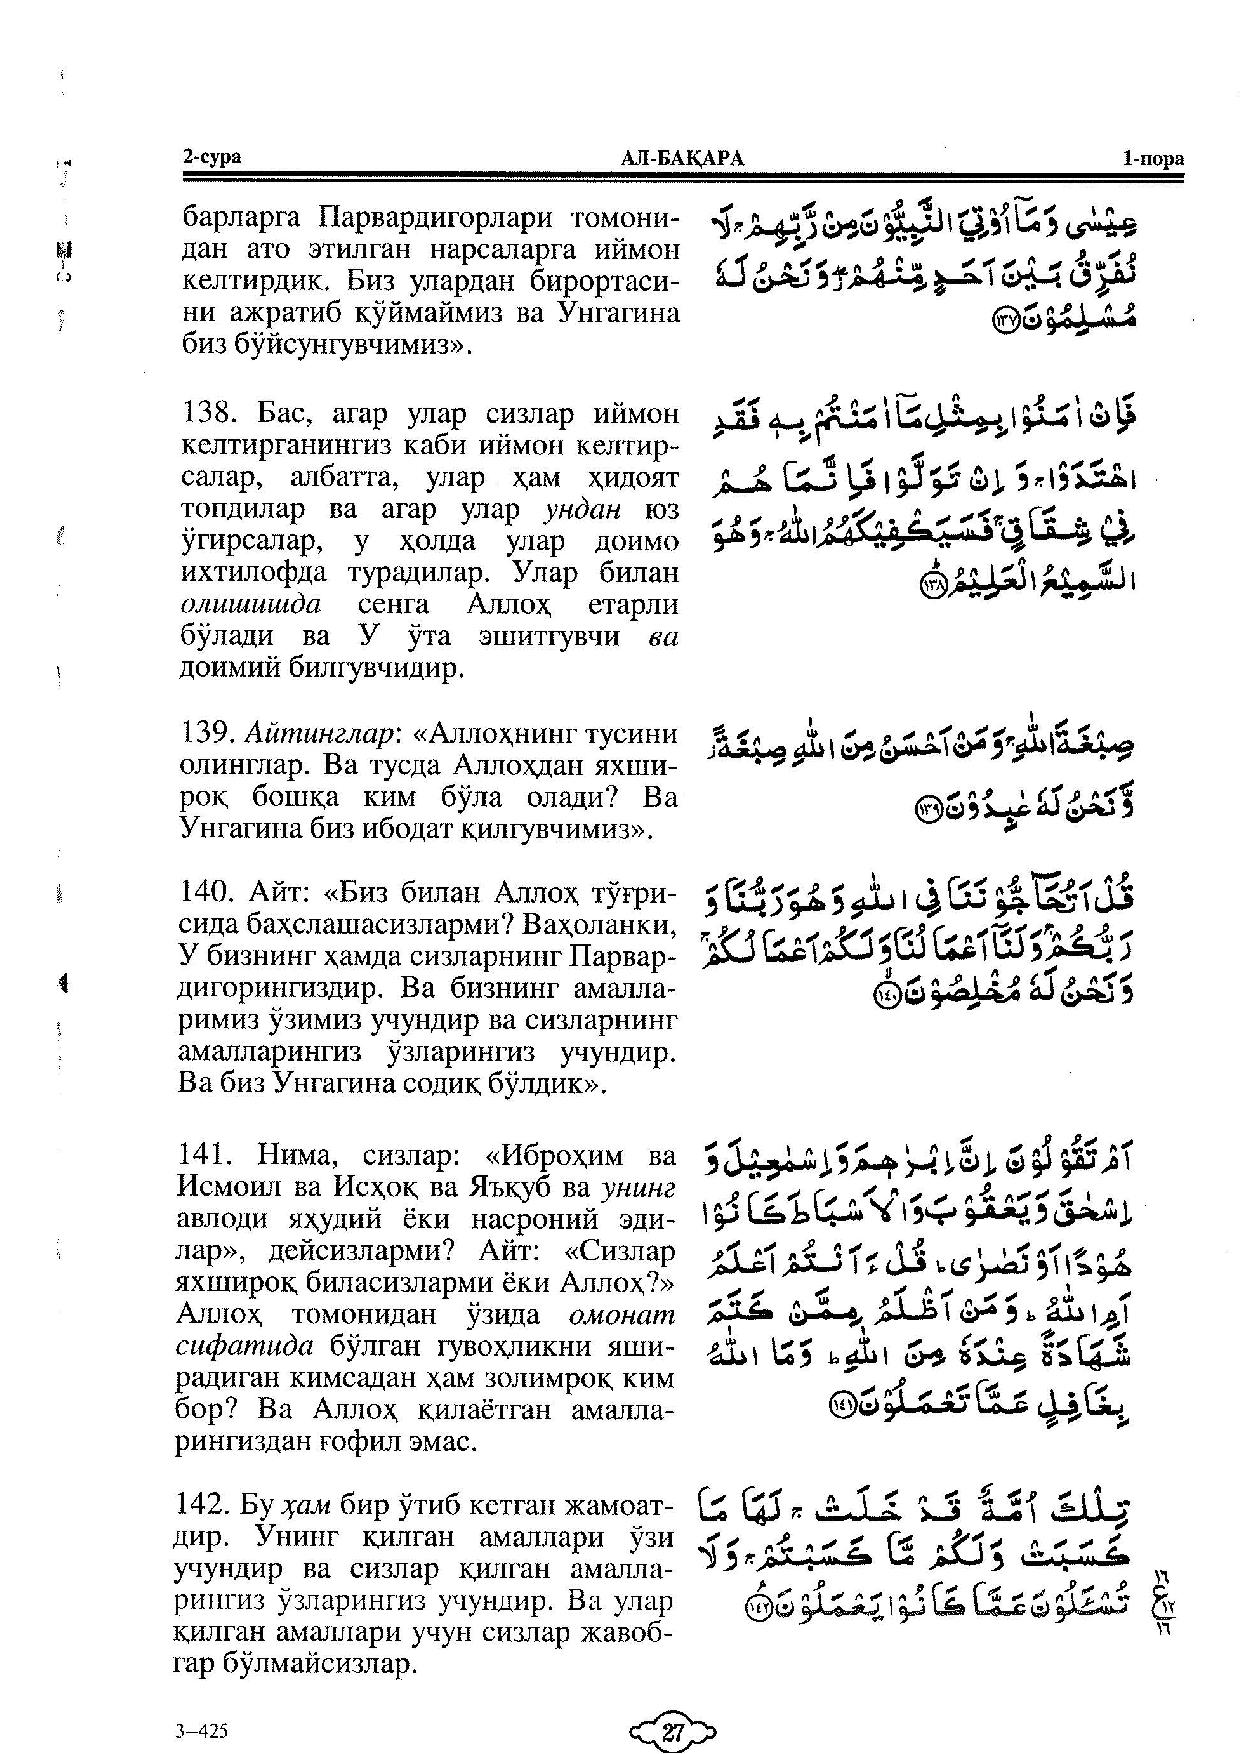 002-al-baqarah-page-025